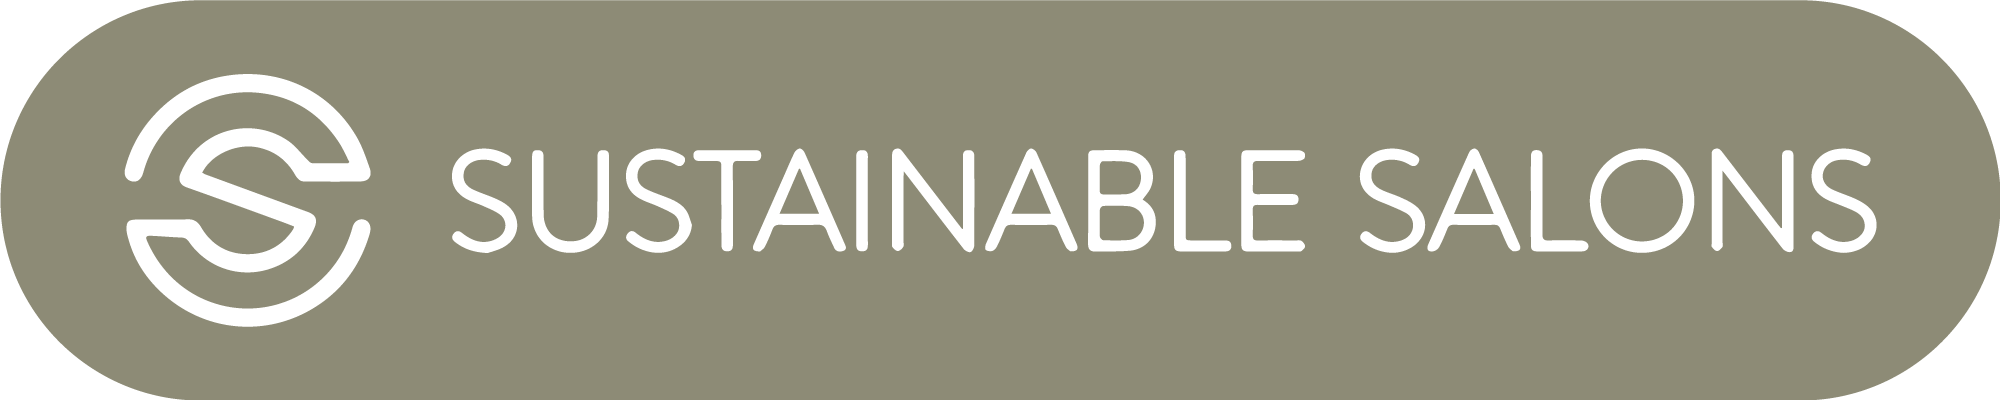 Sustainable-Salons-Logo-Colour-Horizontal